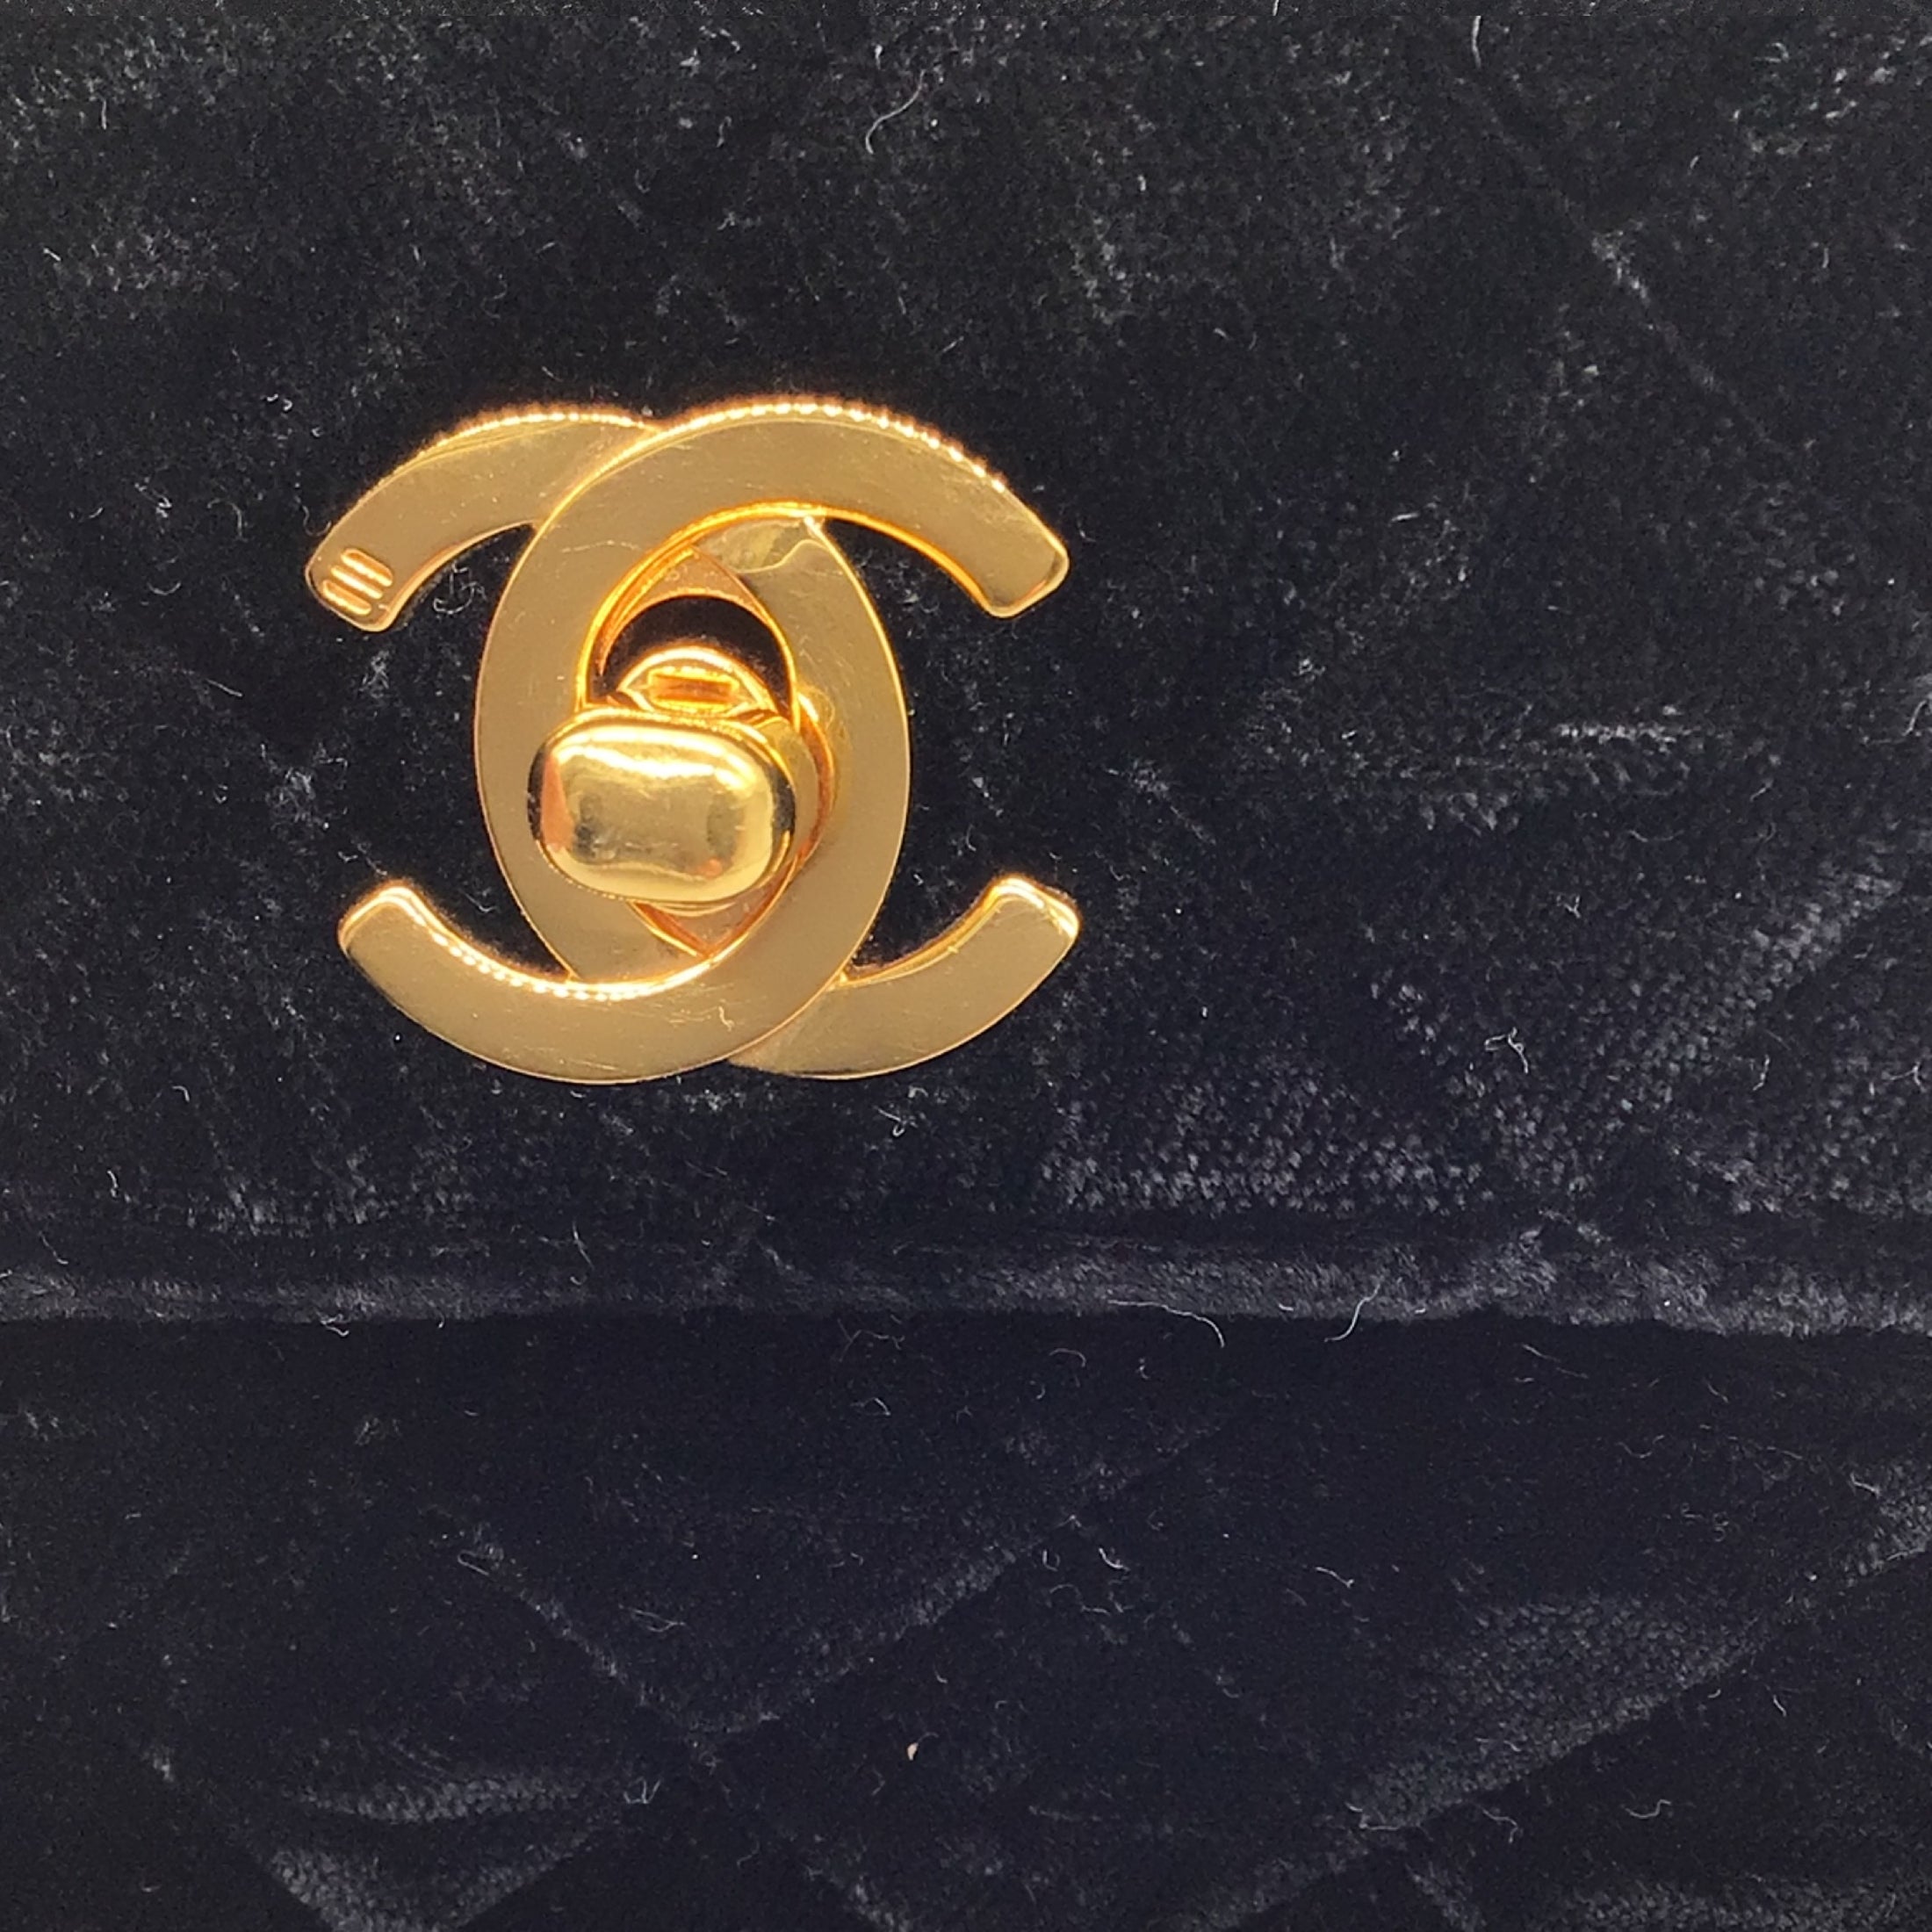 Chanel Black Vintage 80's Quilted Velvet Mini Flap Bag